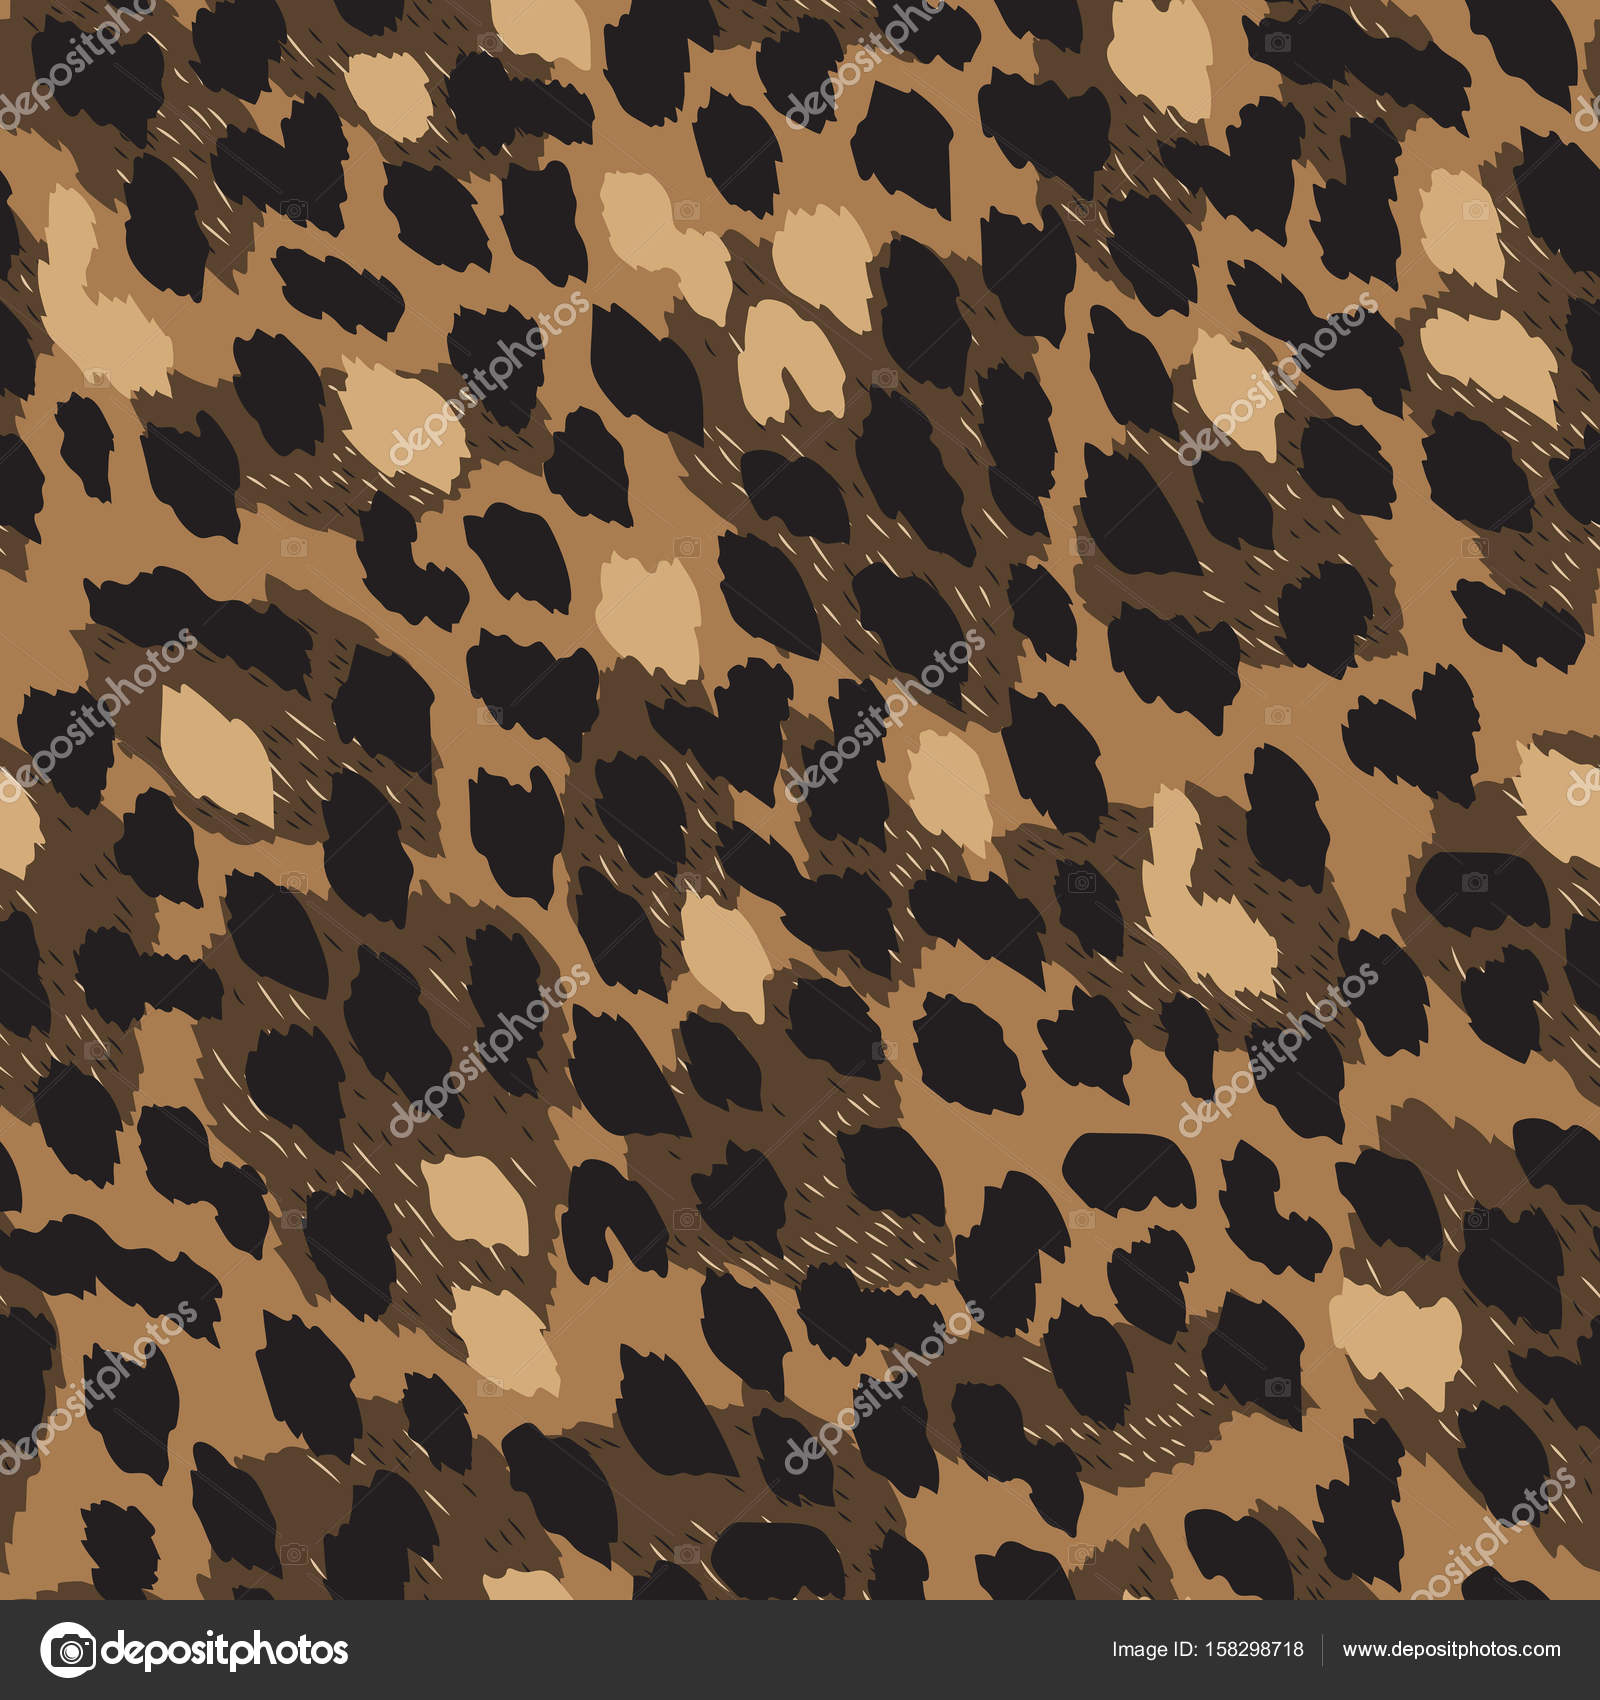 Cheetah Print Fabric, Wallpaper and Home Decor